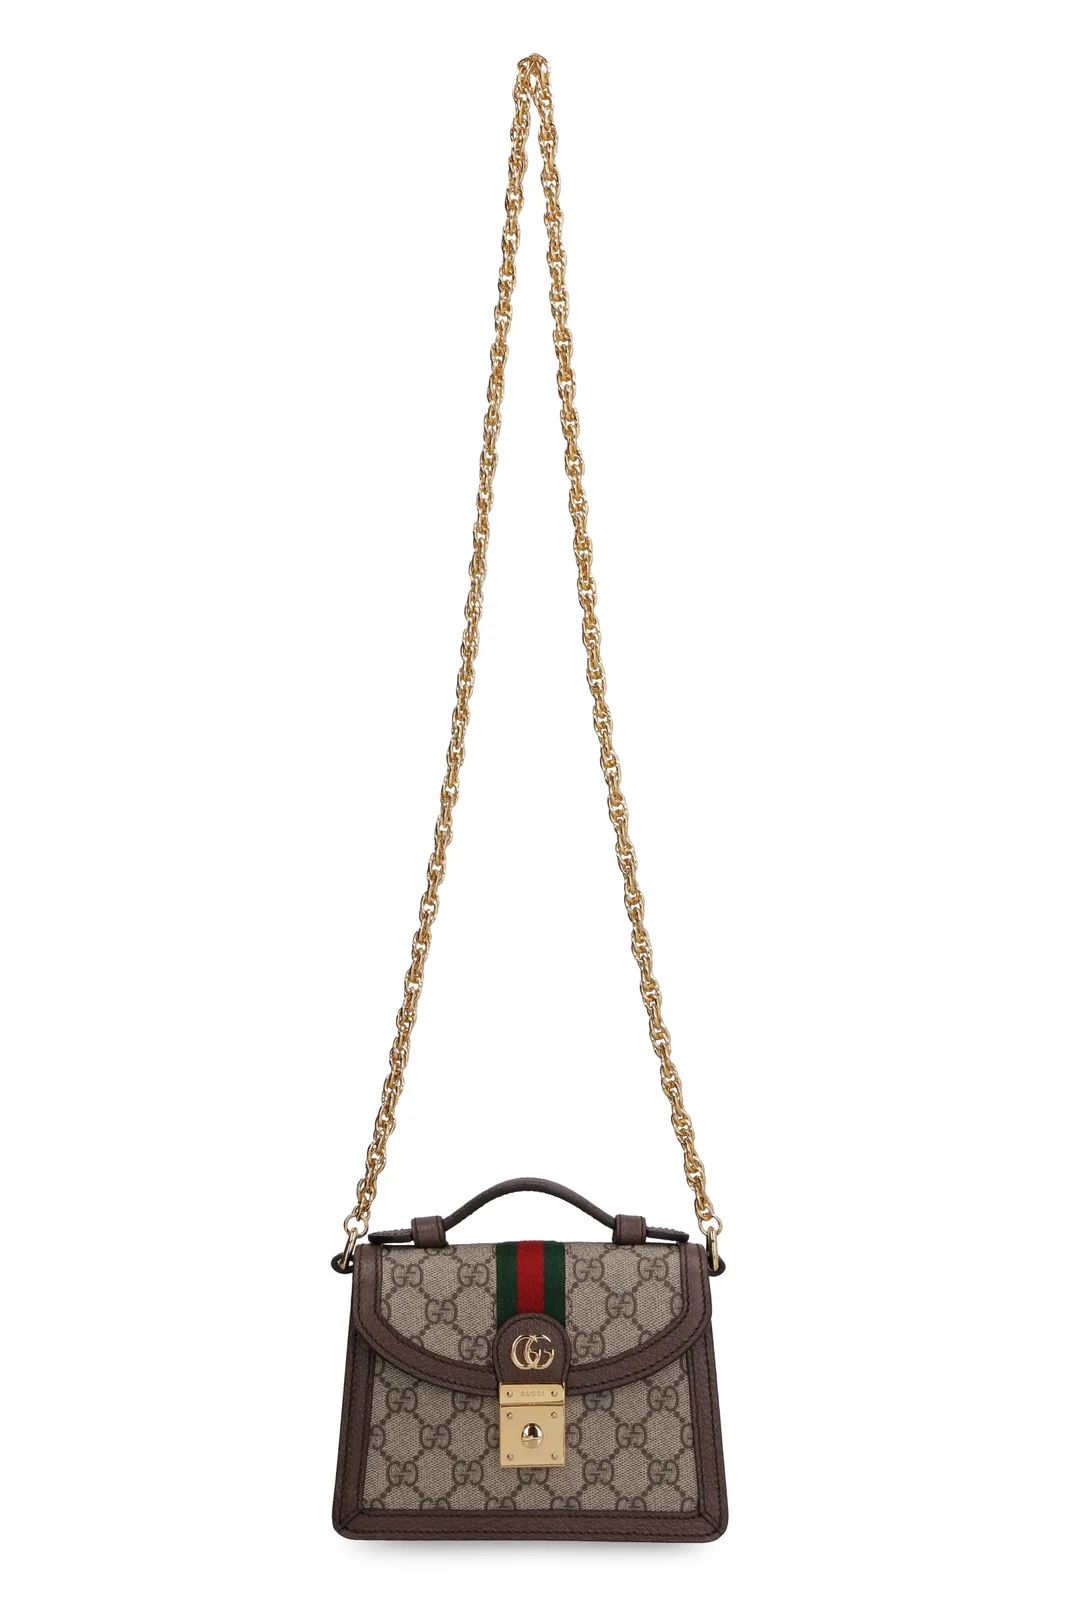 Gucci Ophidia GG Monogram Mini Shoulder Bag | Cettire Global